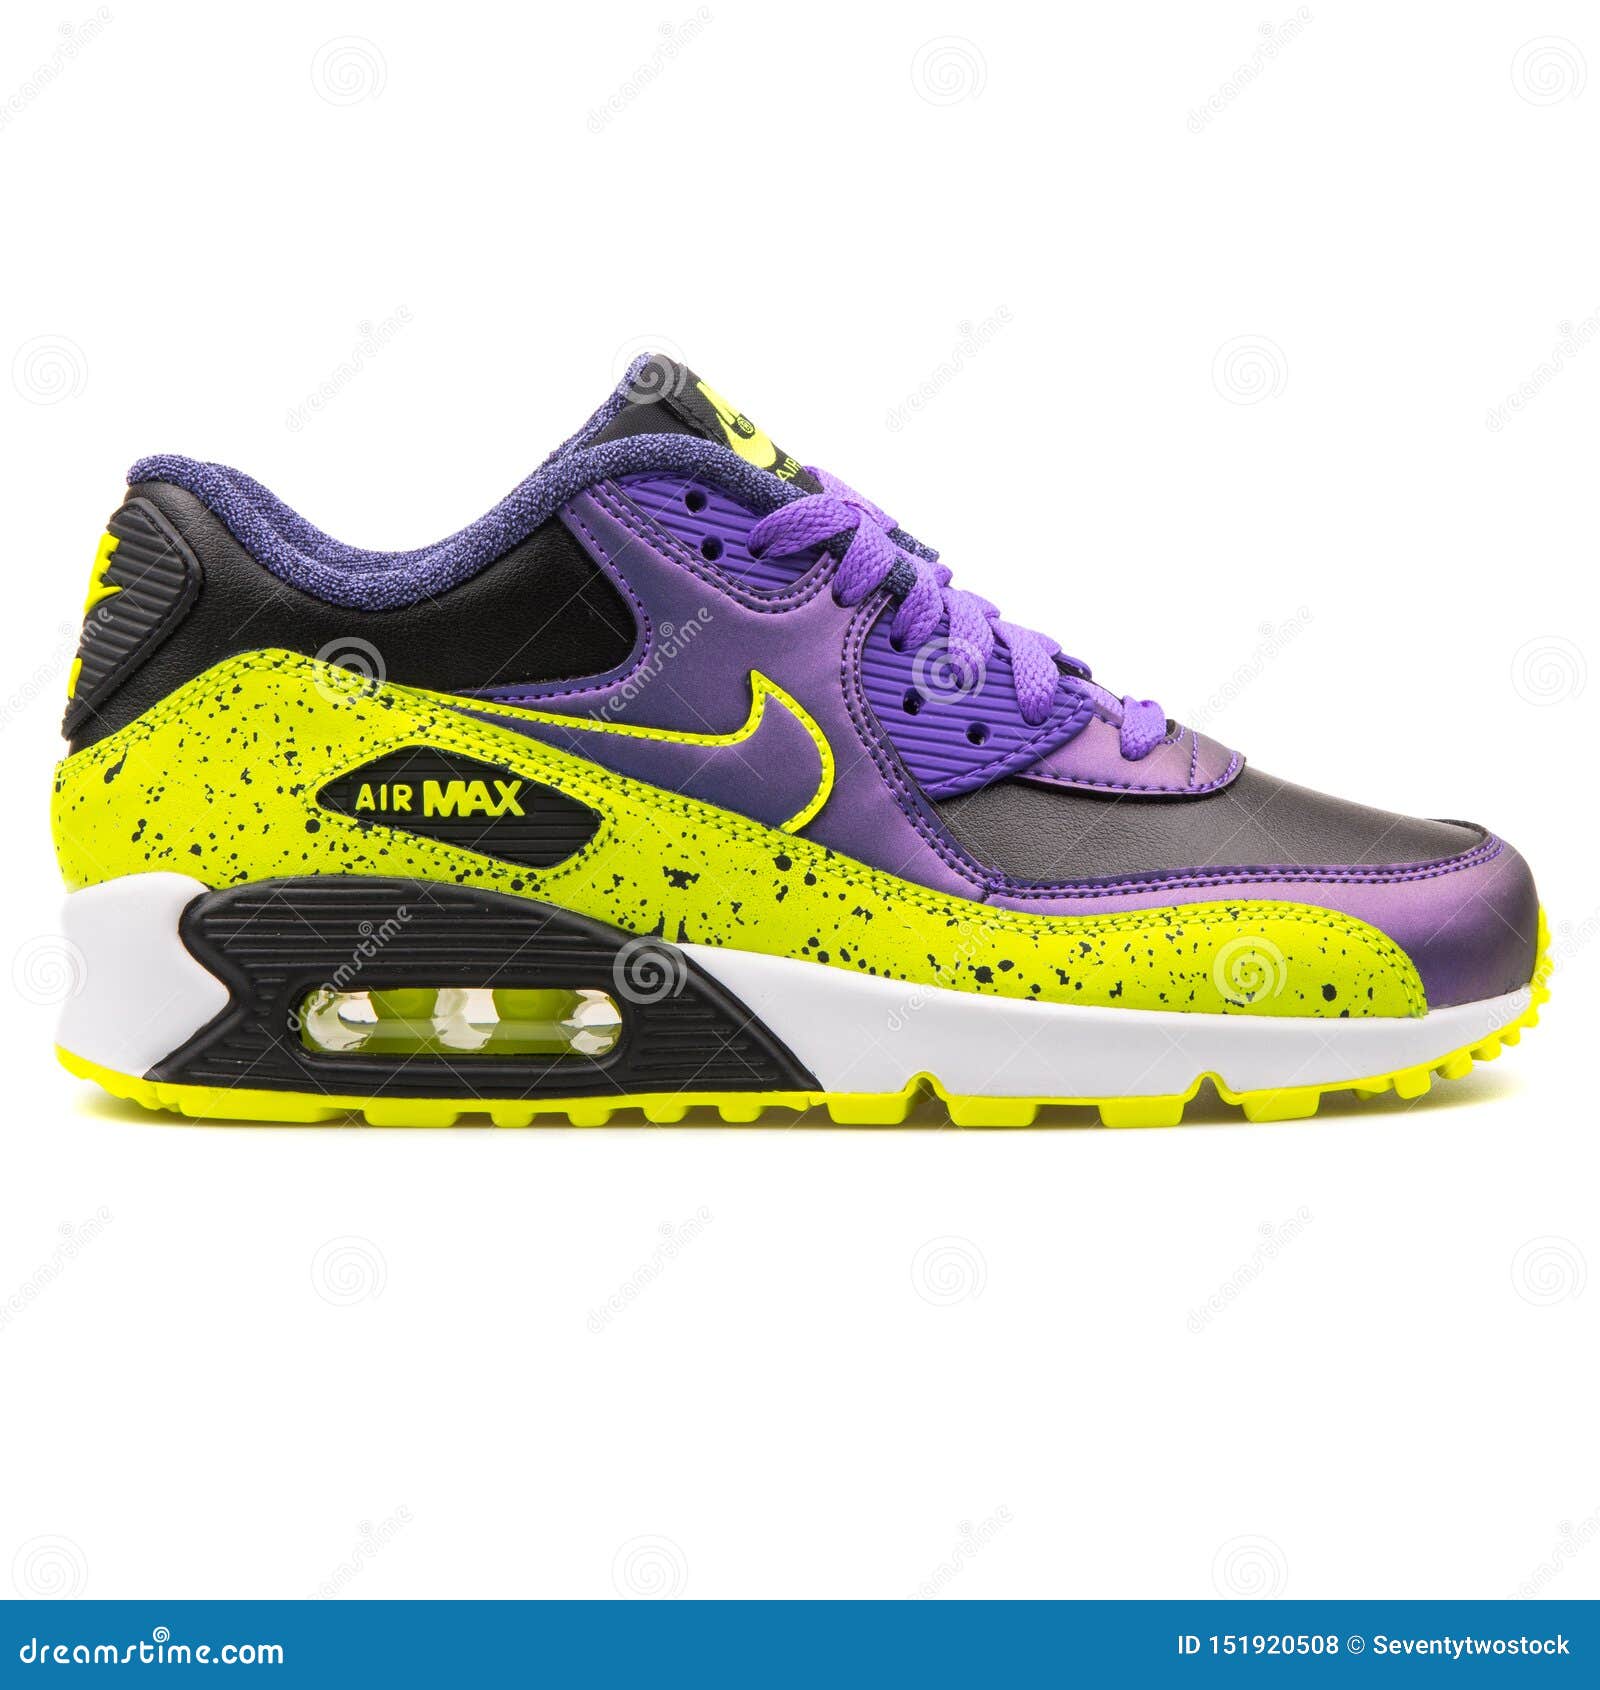 Nike Air Max 90 FB Black, Purple And Yellow Sneaker Editorial Stock Photo -  Image of shoe, nike: 151920508